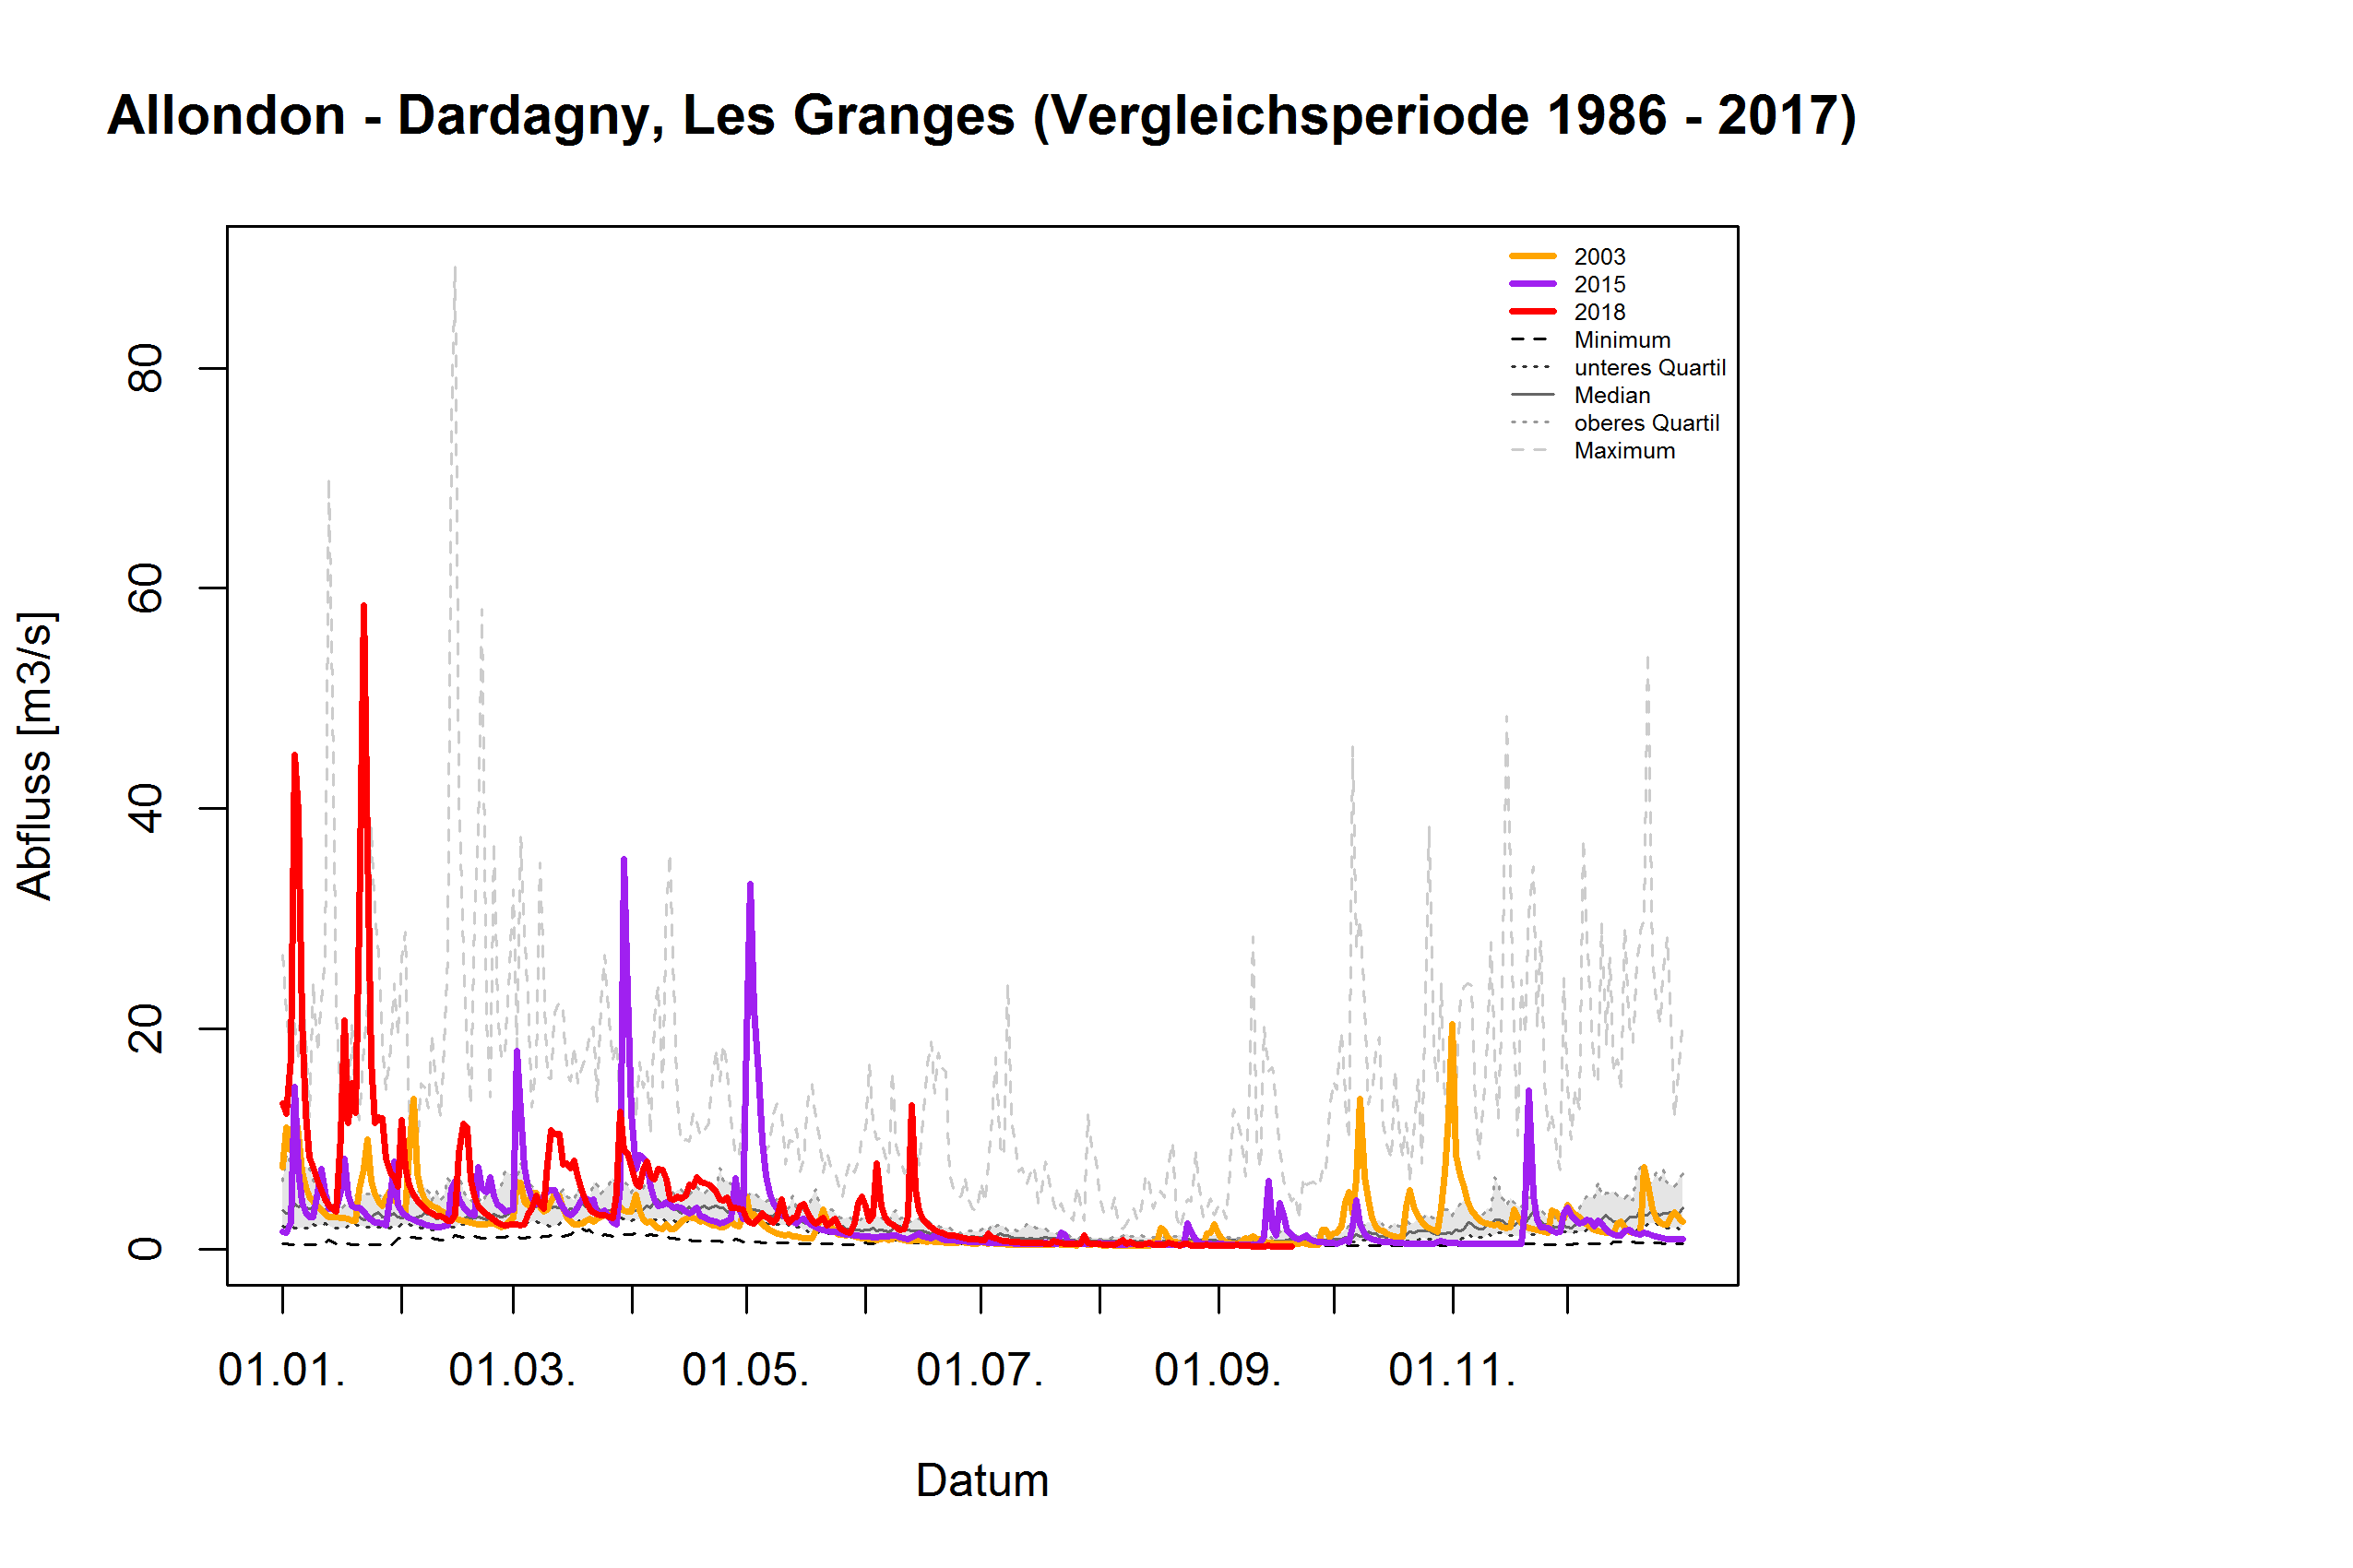 Allondon - Dardagny, Les Granges: Vergleichsperiode 1986 - 2017